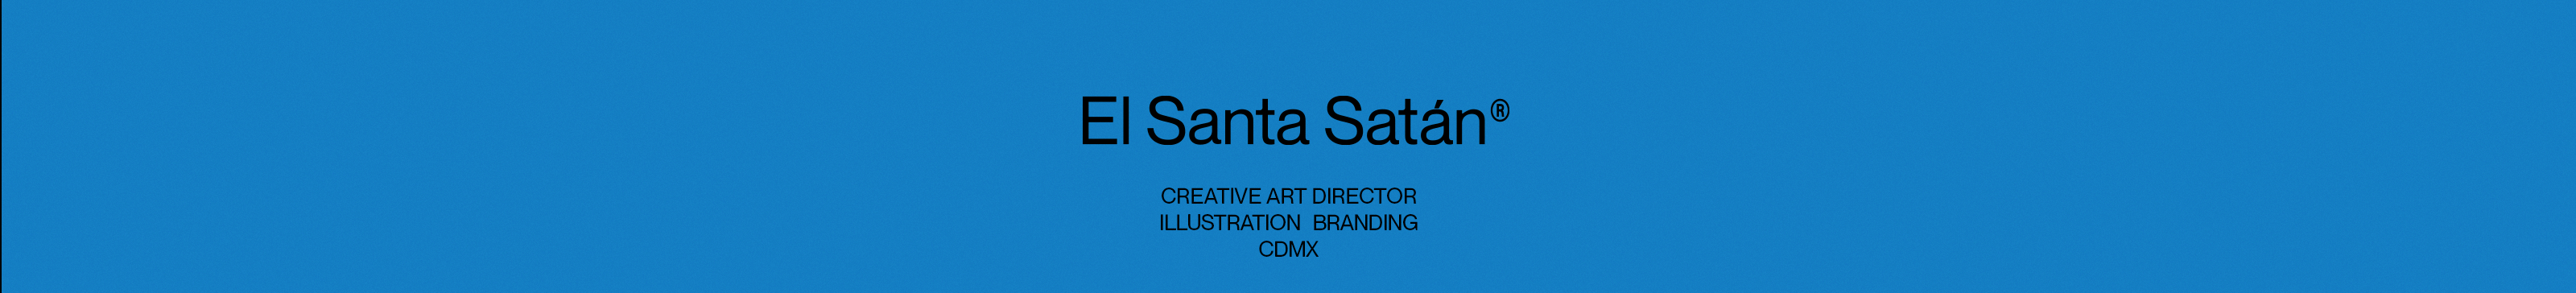 Profielbanner van El Santa Satán